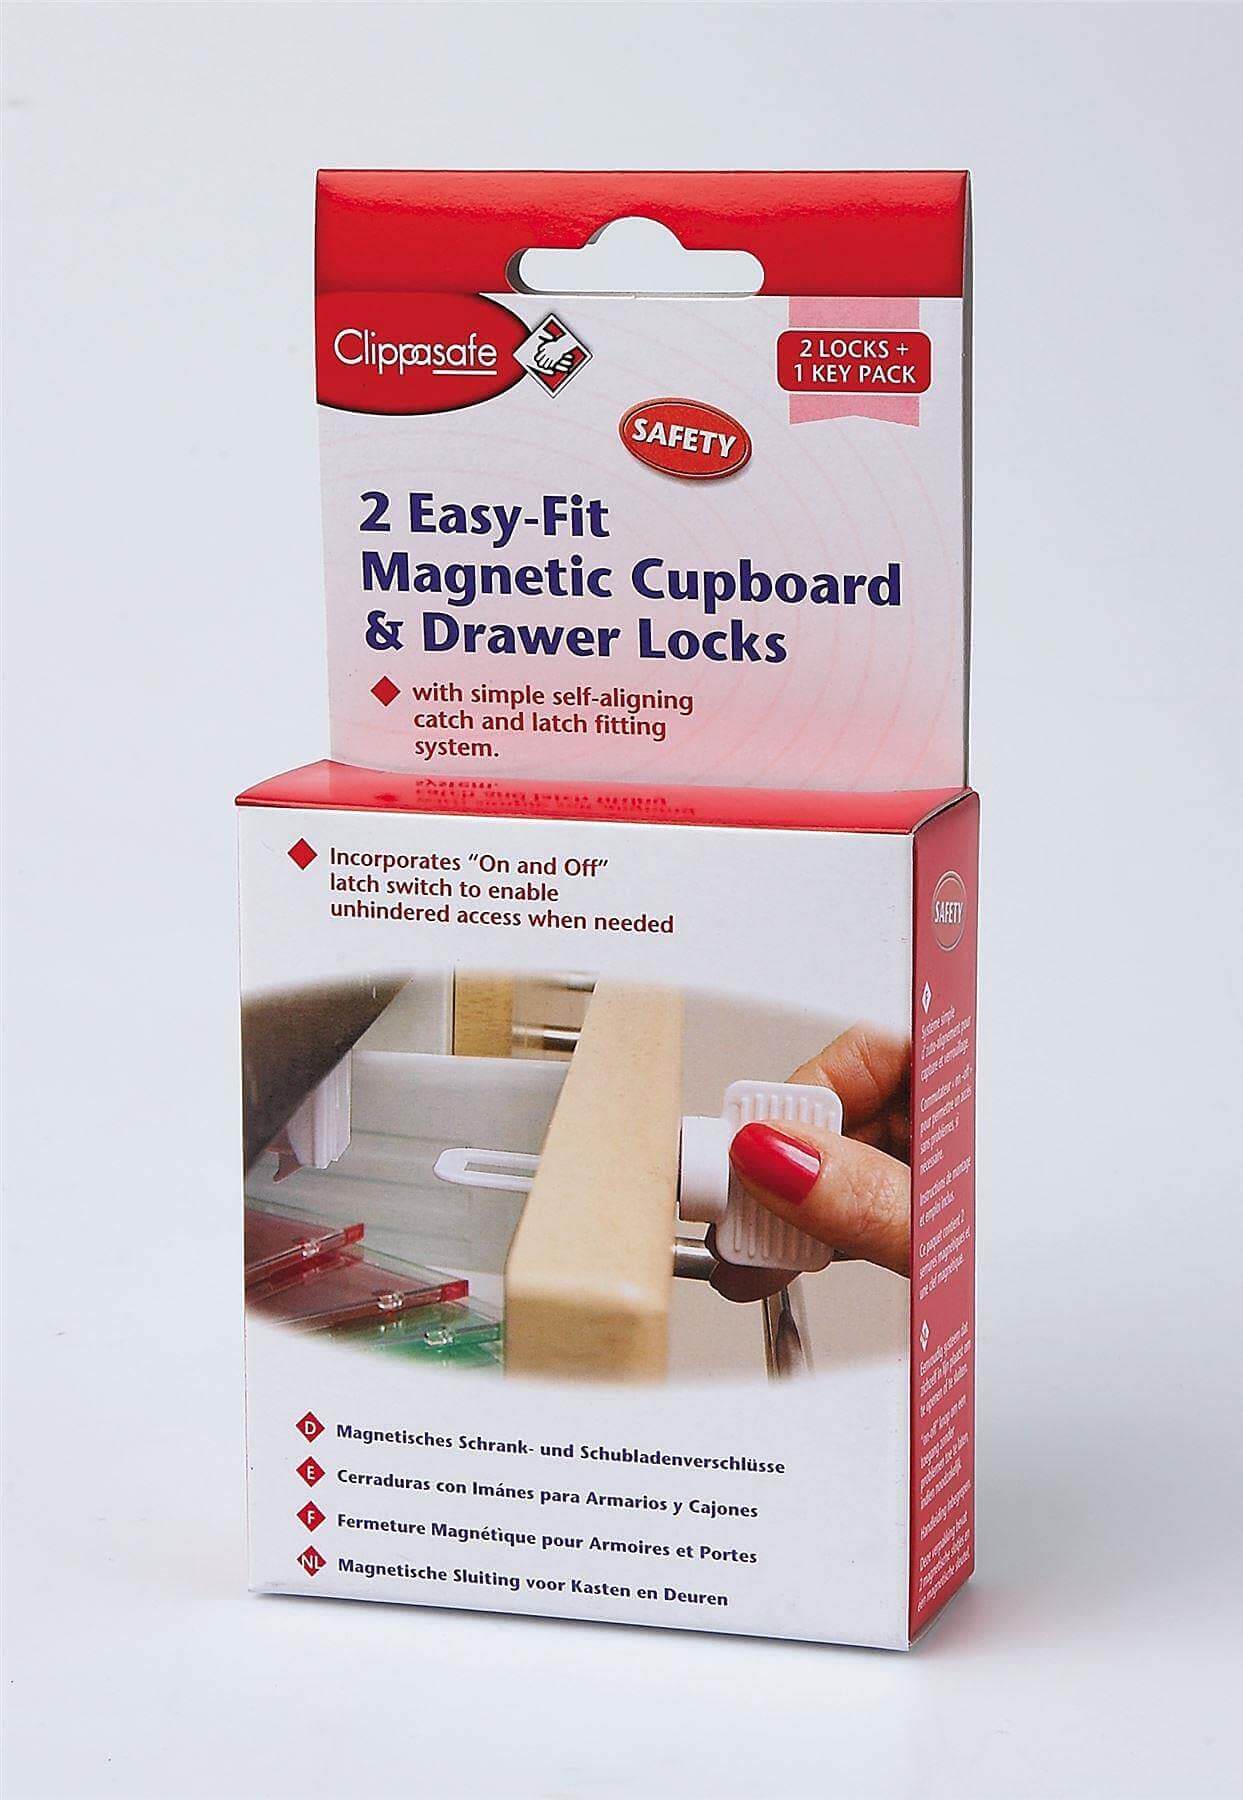 Clippasafe Magnetic Cupboard & Drawer Locks - 2 Locks+1 Key baby care safety Earthlets